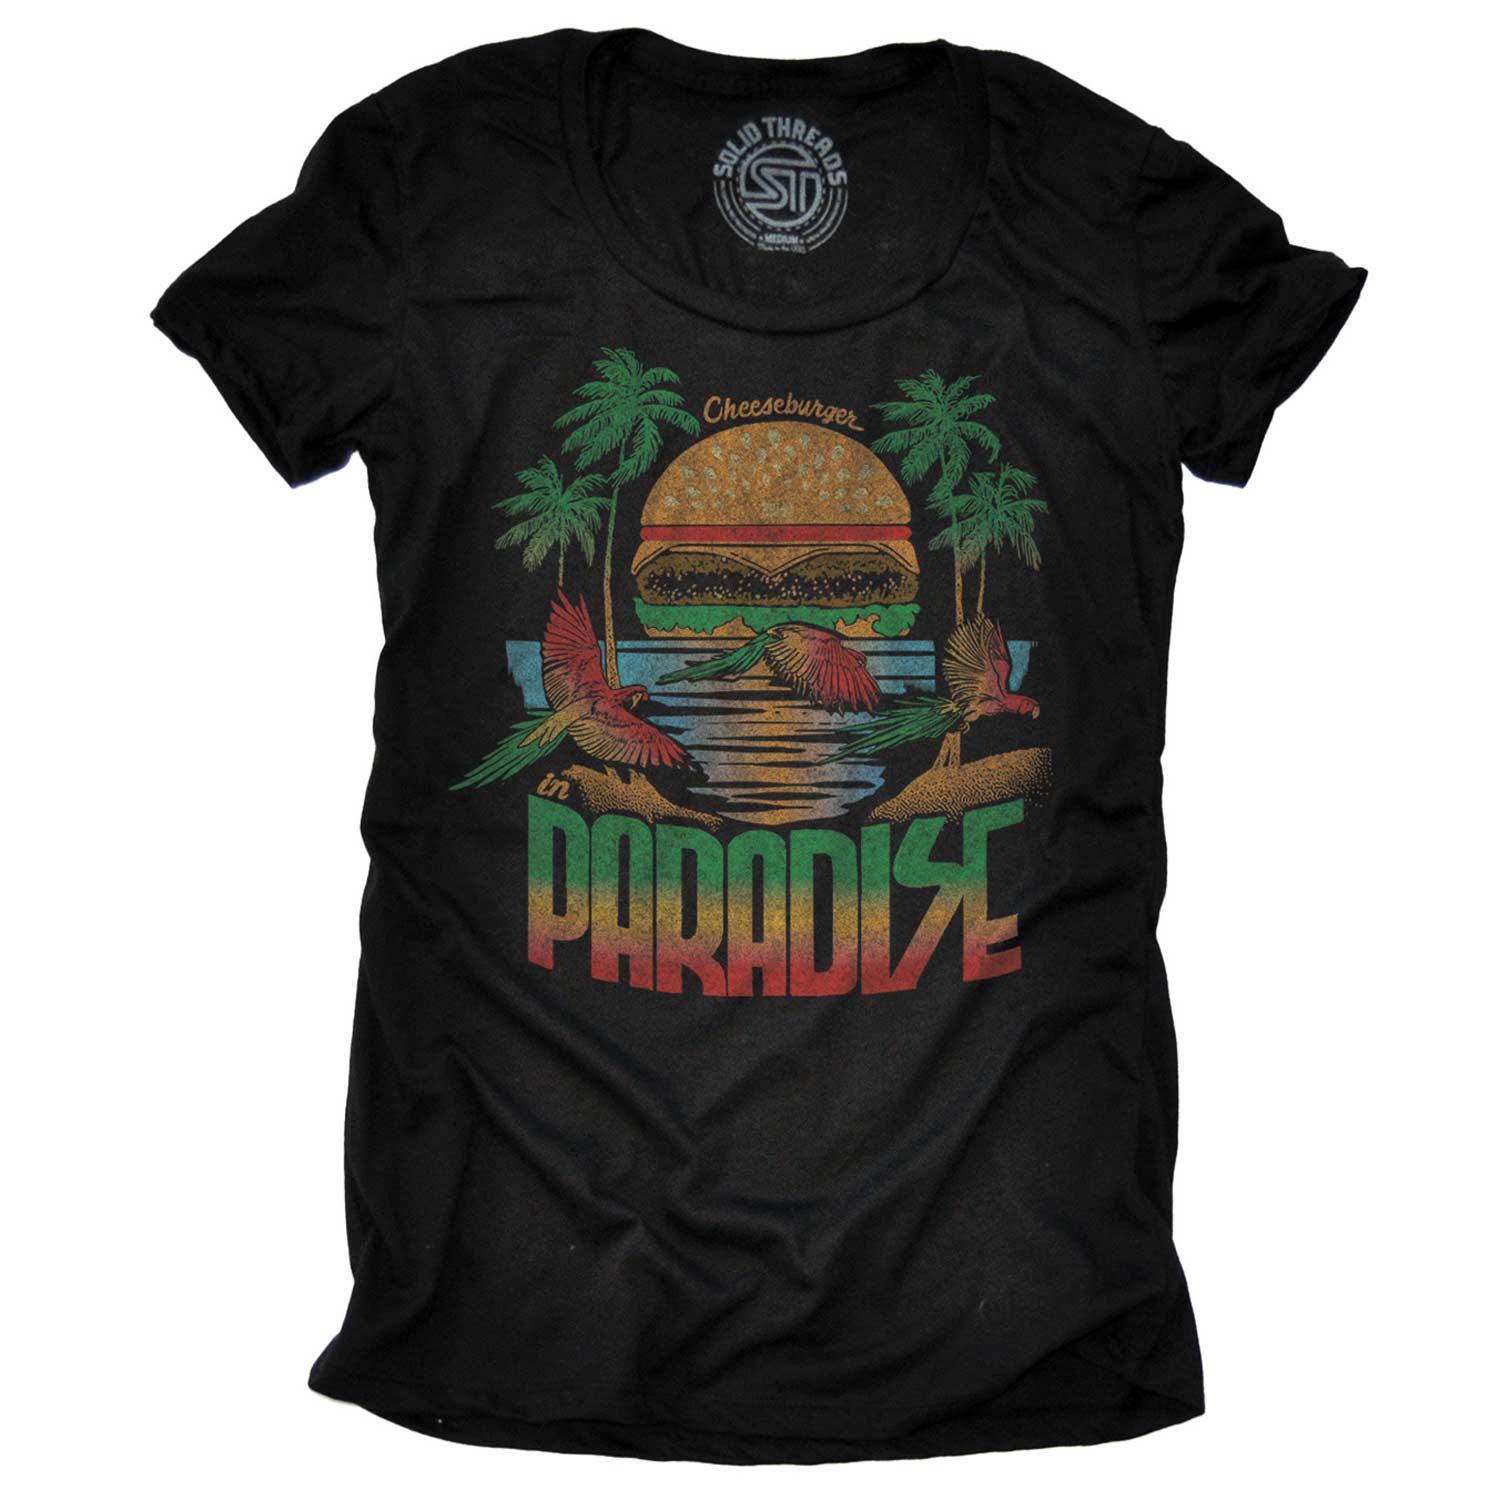 Women's Cheeseburger in Paradise T-shirt